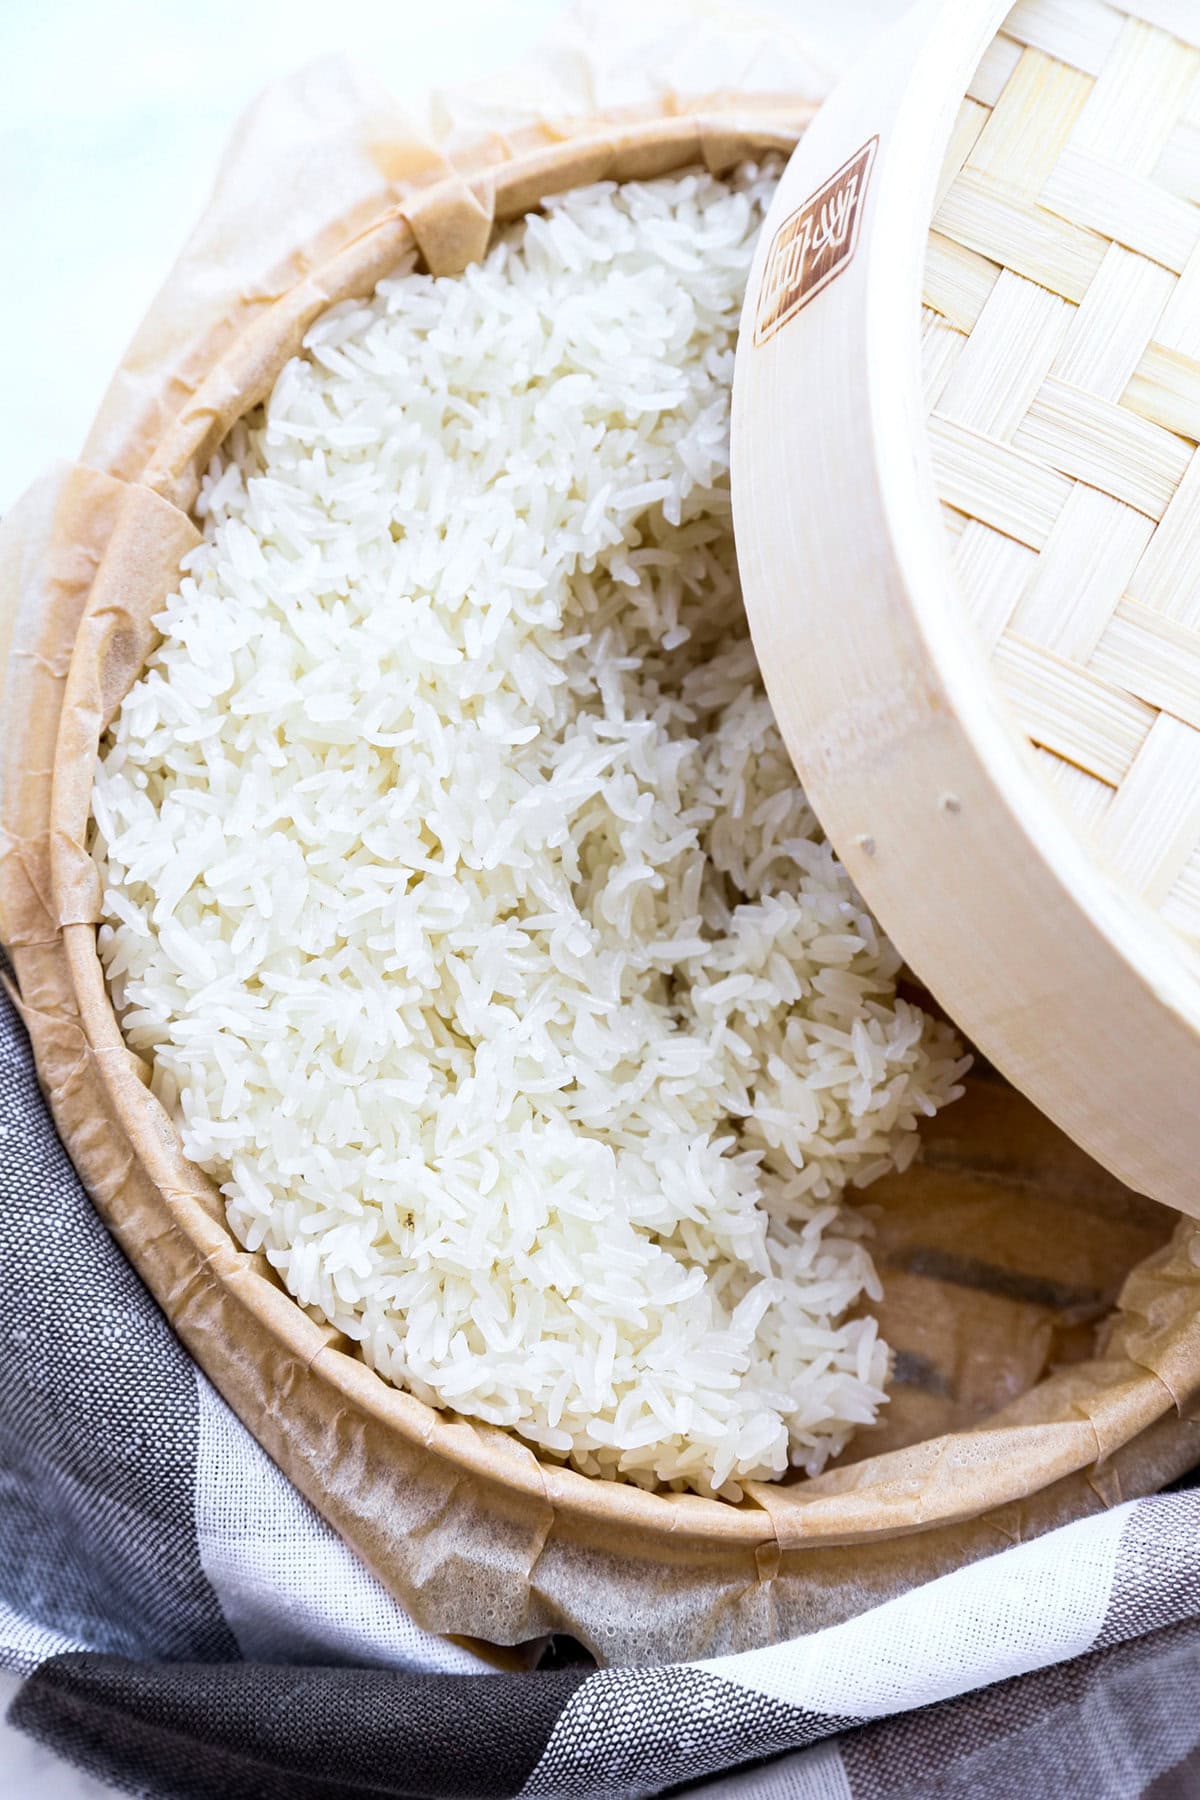 https://pickledplum.com/wp-content/uploads/2020/09/how-to-make-sticky-rice-OPTM.jpg